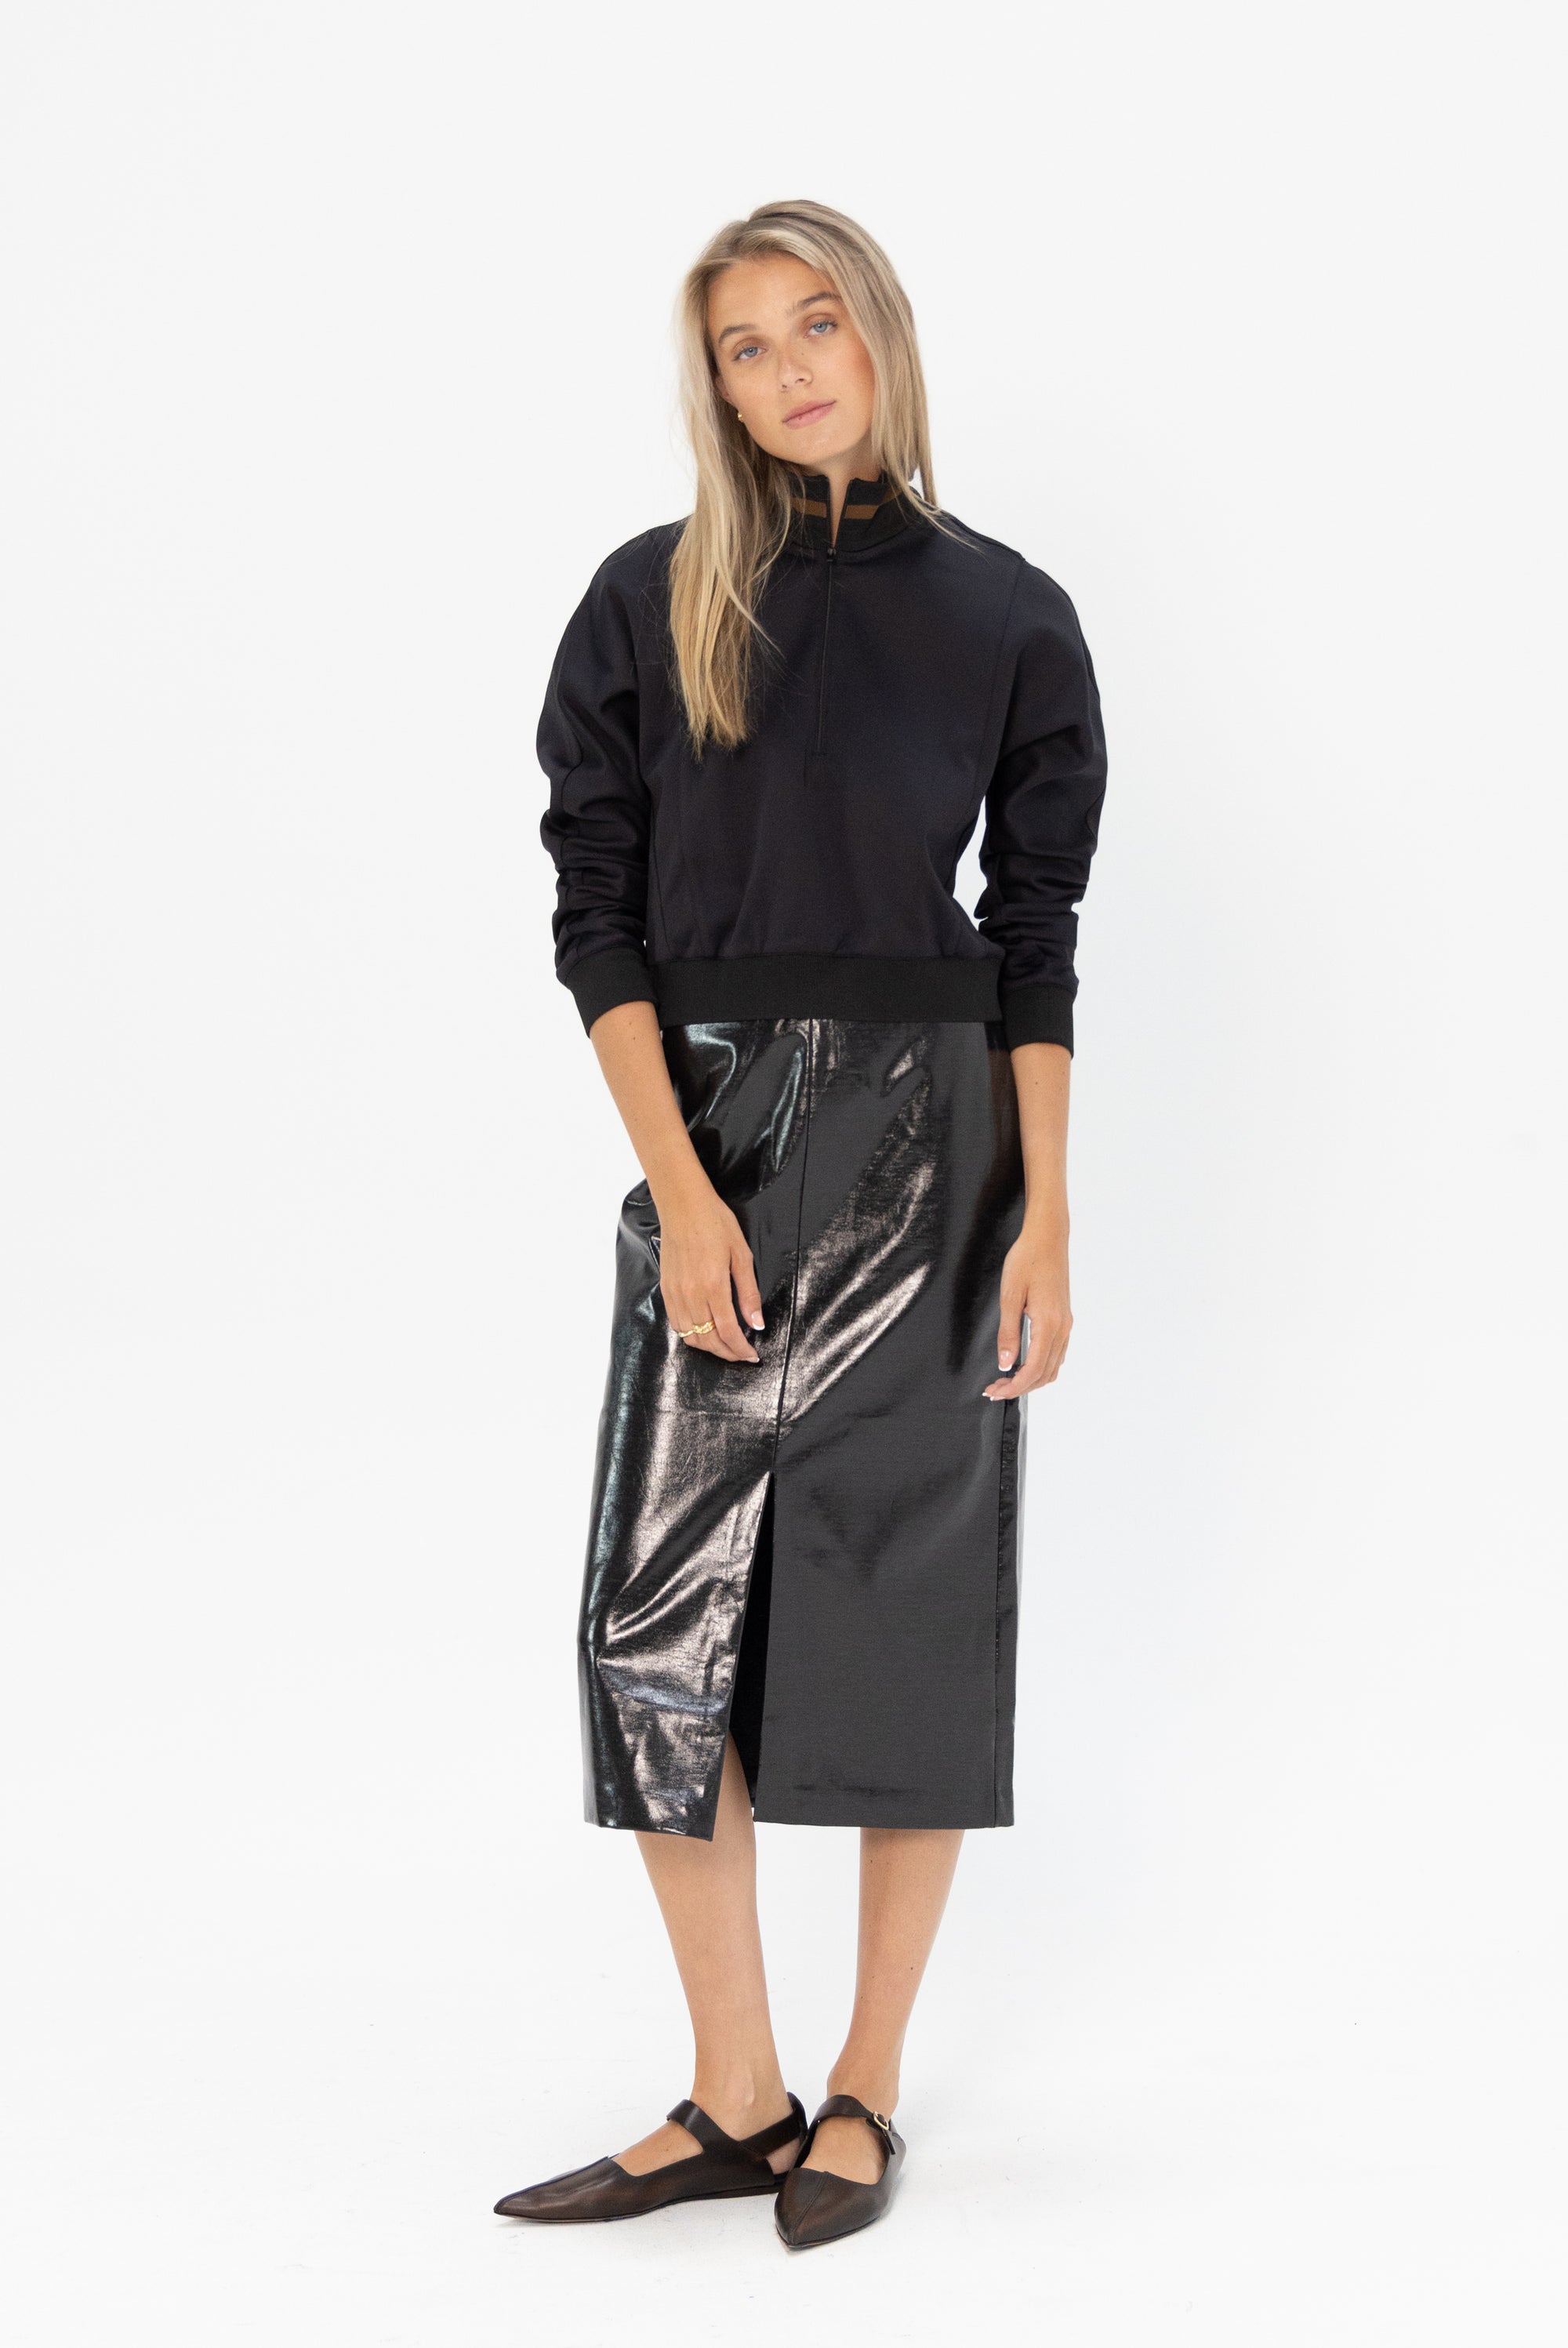 TIBI - Glossed Jersey Pencil Skirt, Black